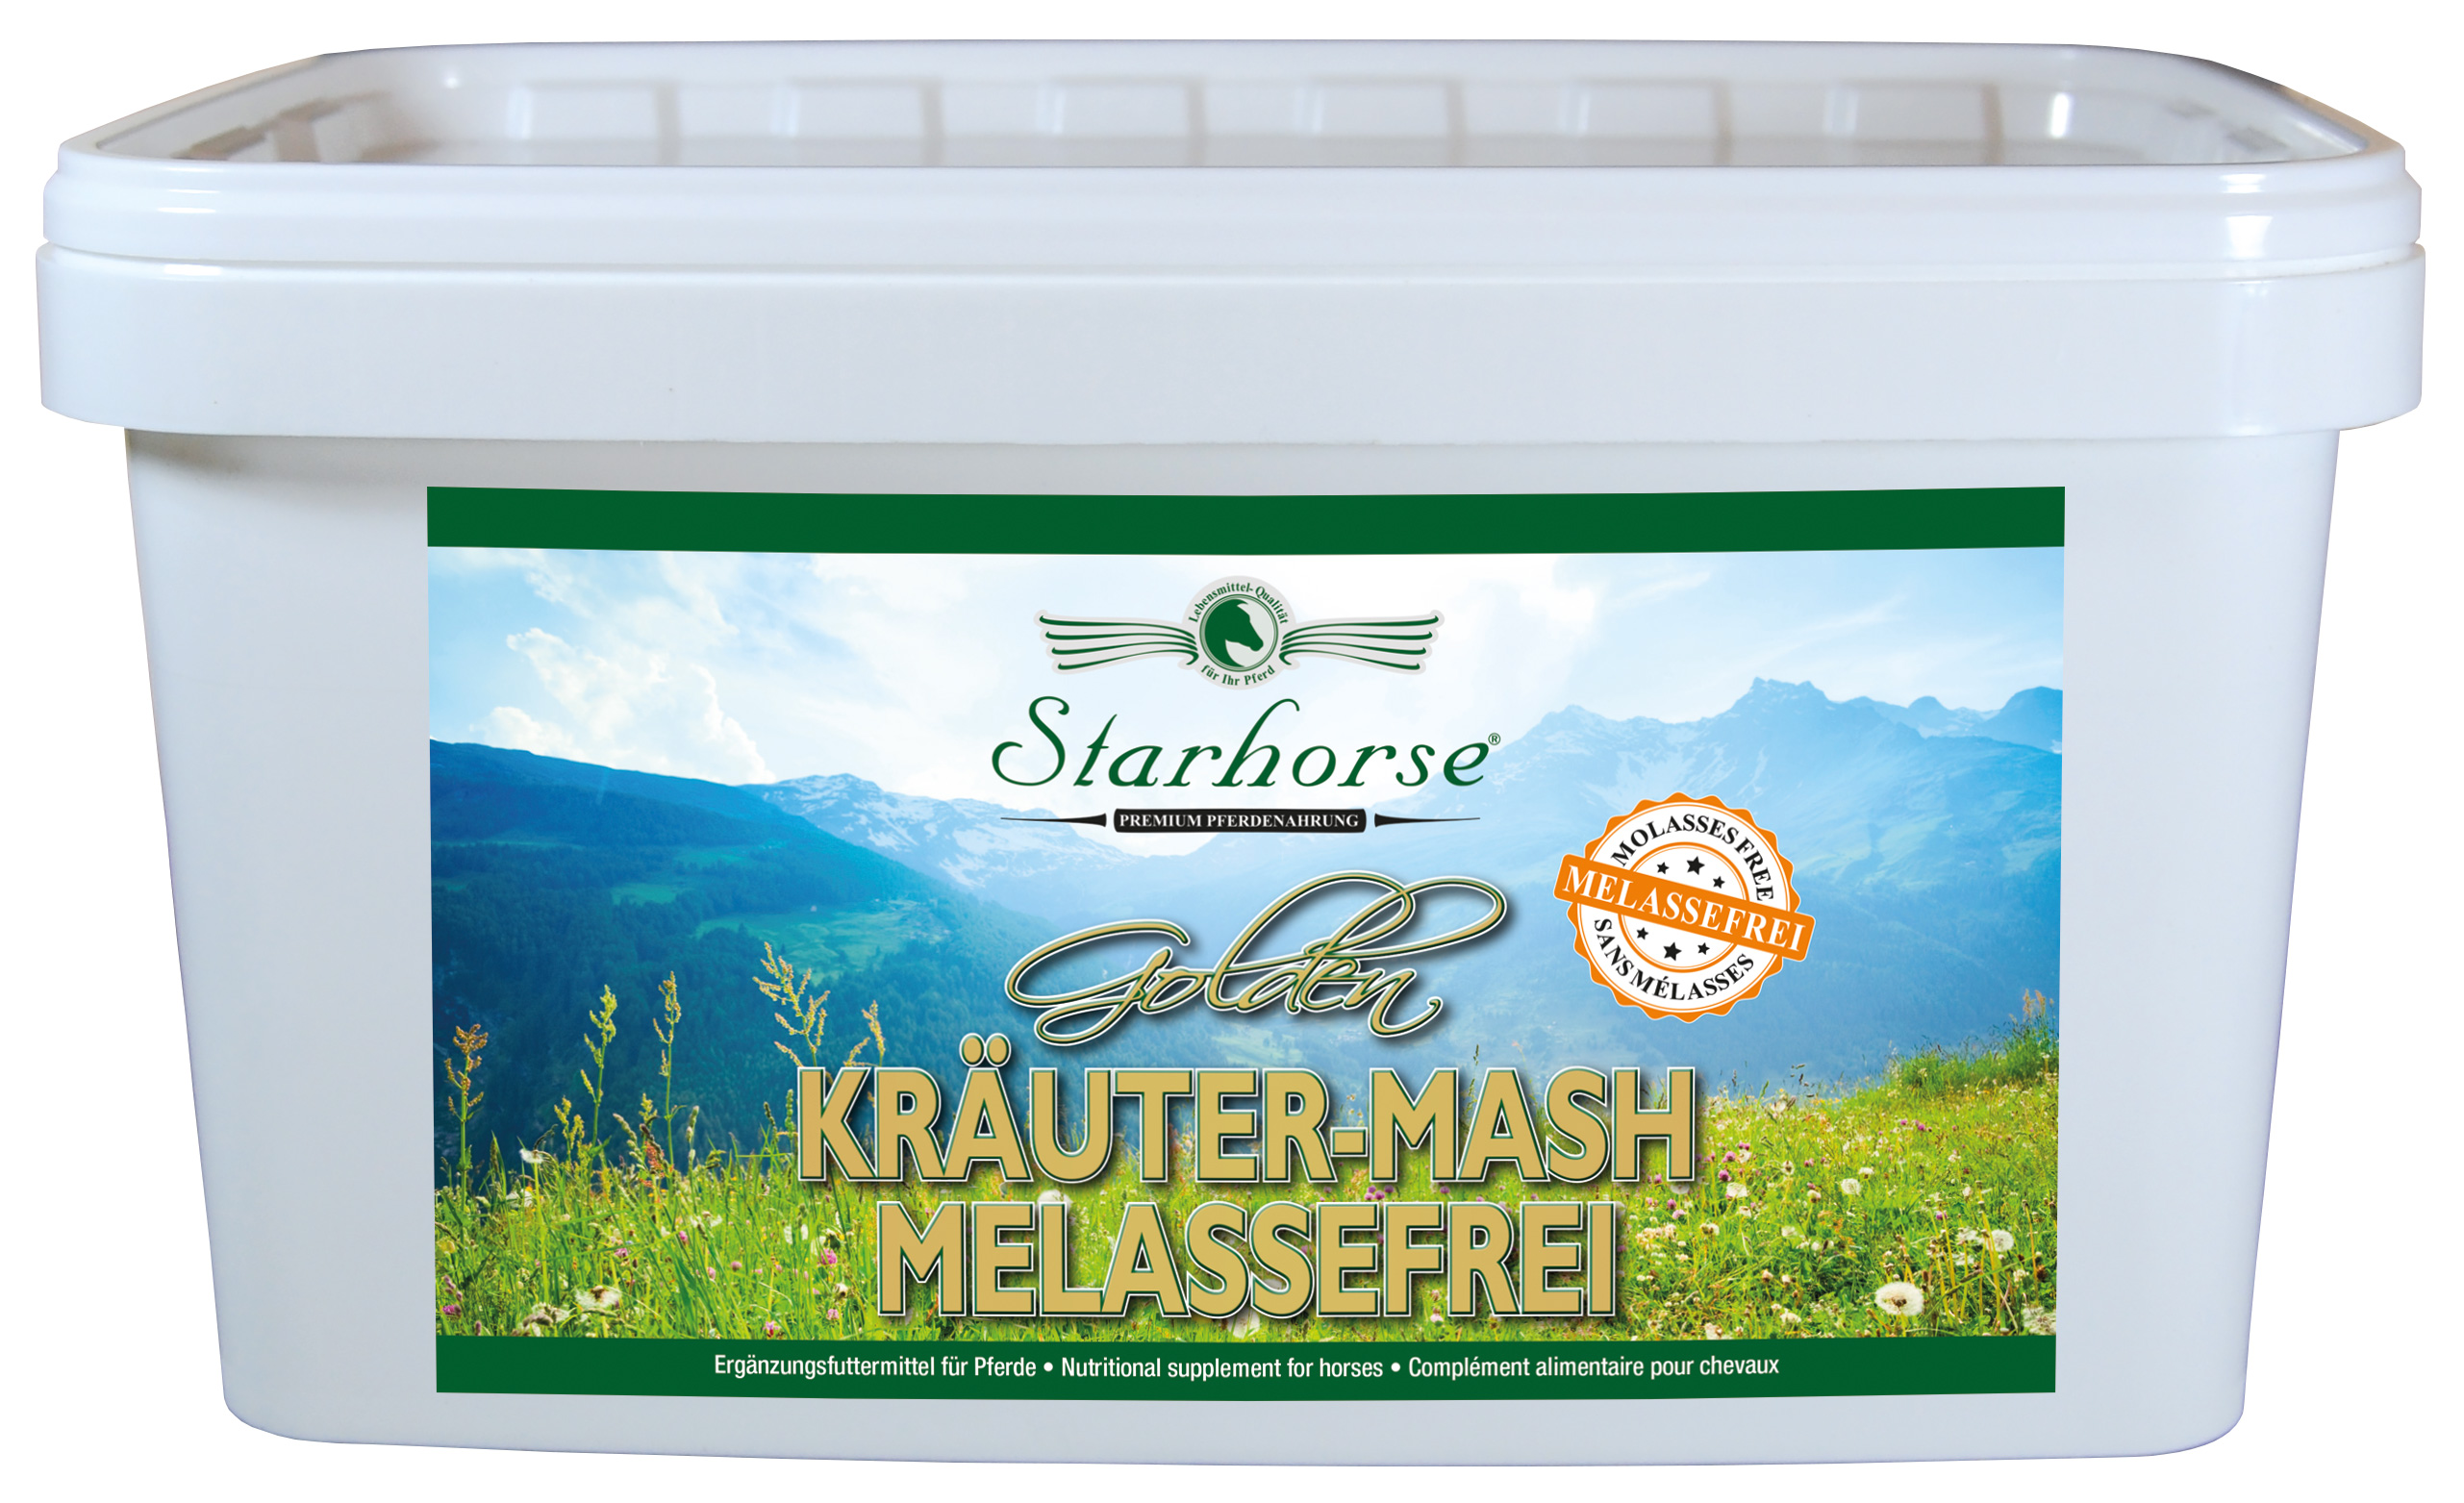 Starhorse Golden Kräuter Mash melassefrei, 4kg